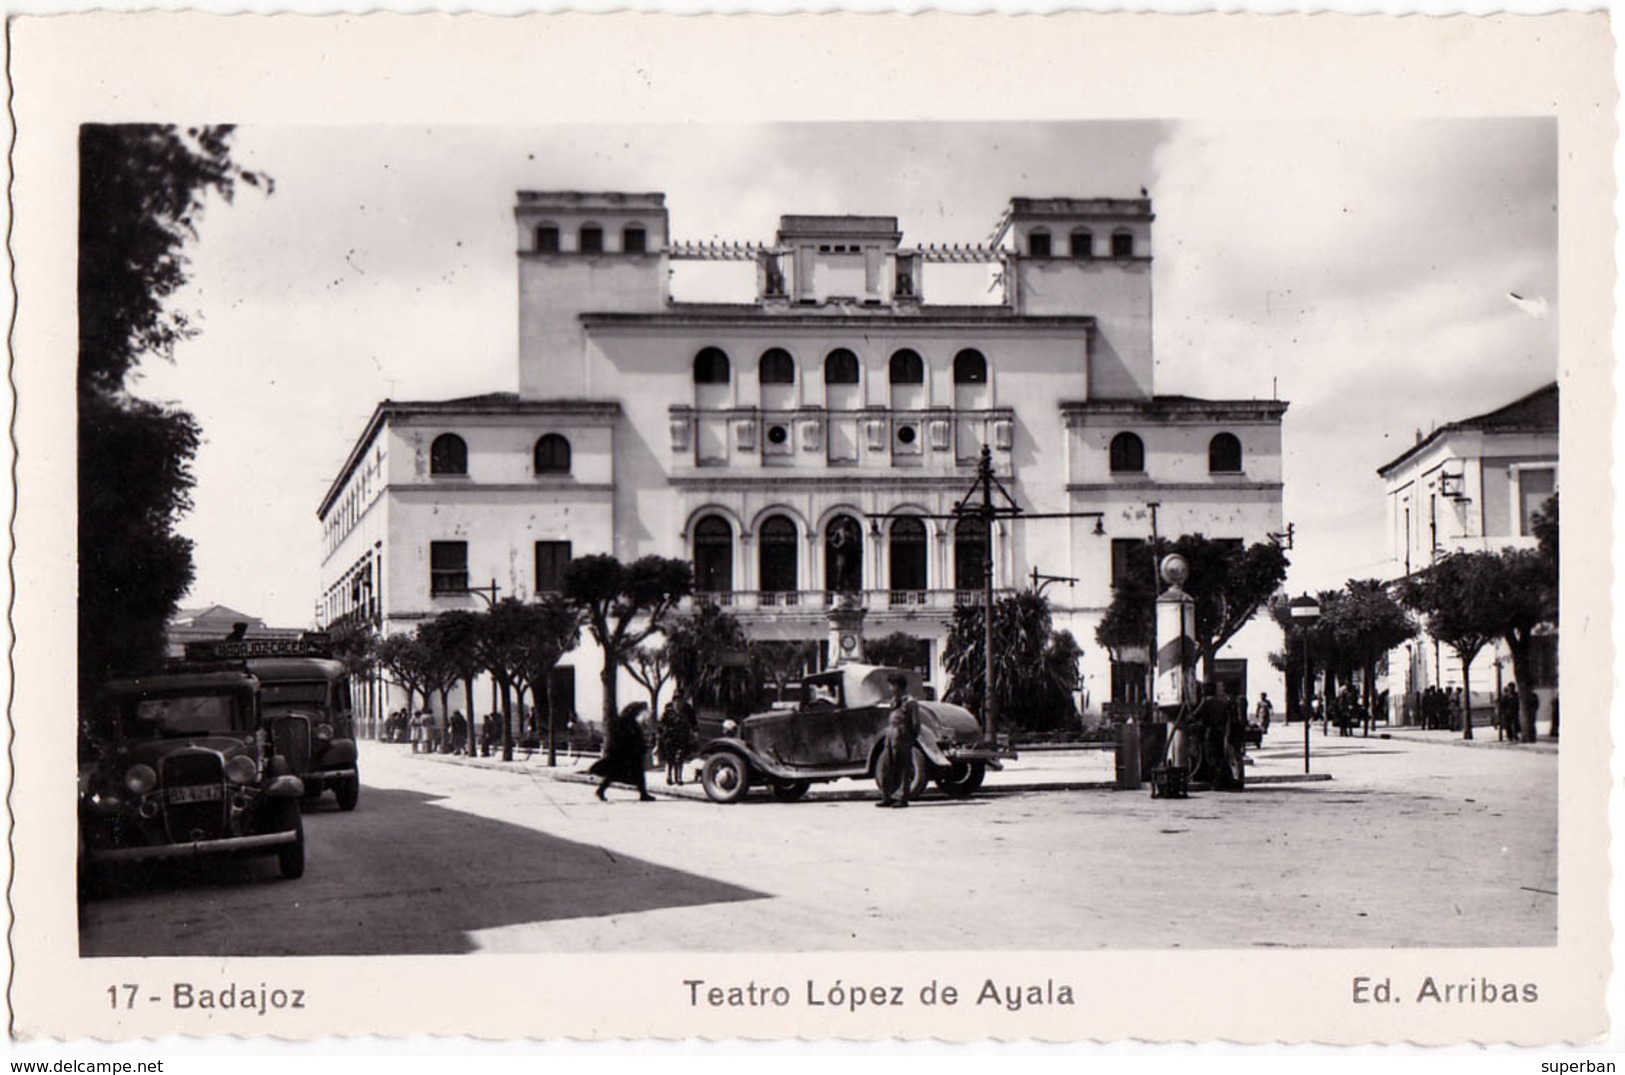 BADAJOZ : TEATRO LOPEZ DE AYALA - CARTE VRAIE PHOTO / REAL PHOTO - ANNÉE / YEAR ~ 1940 (aa862) - Badajoz